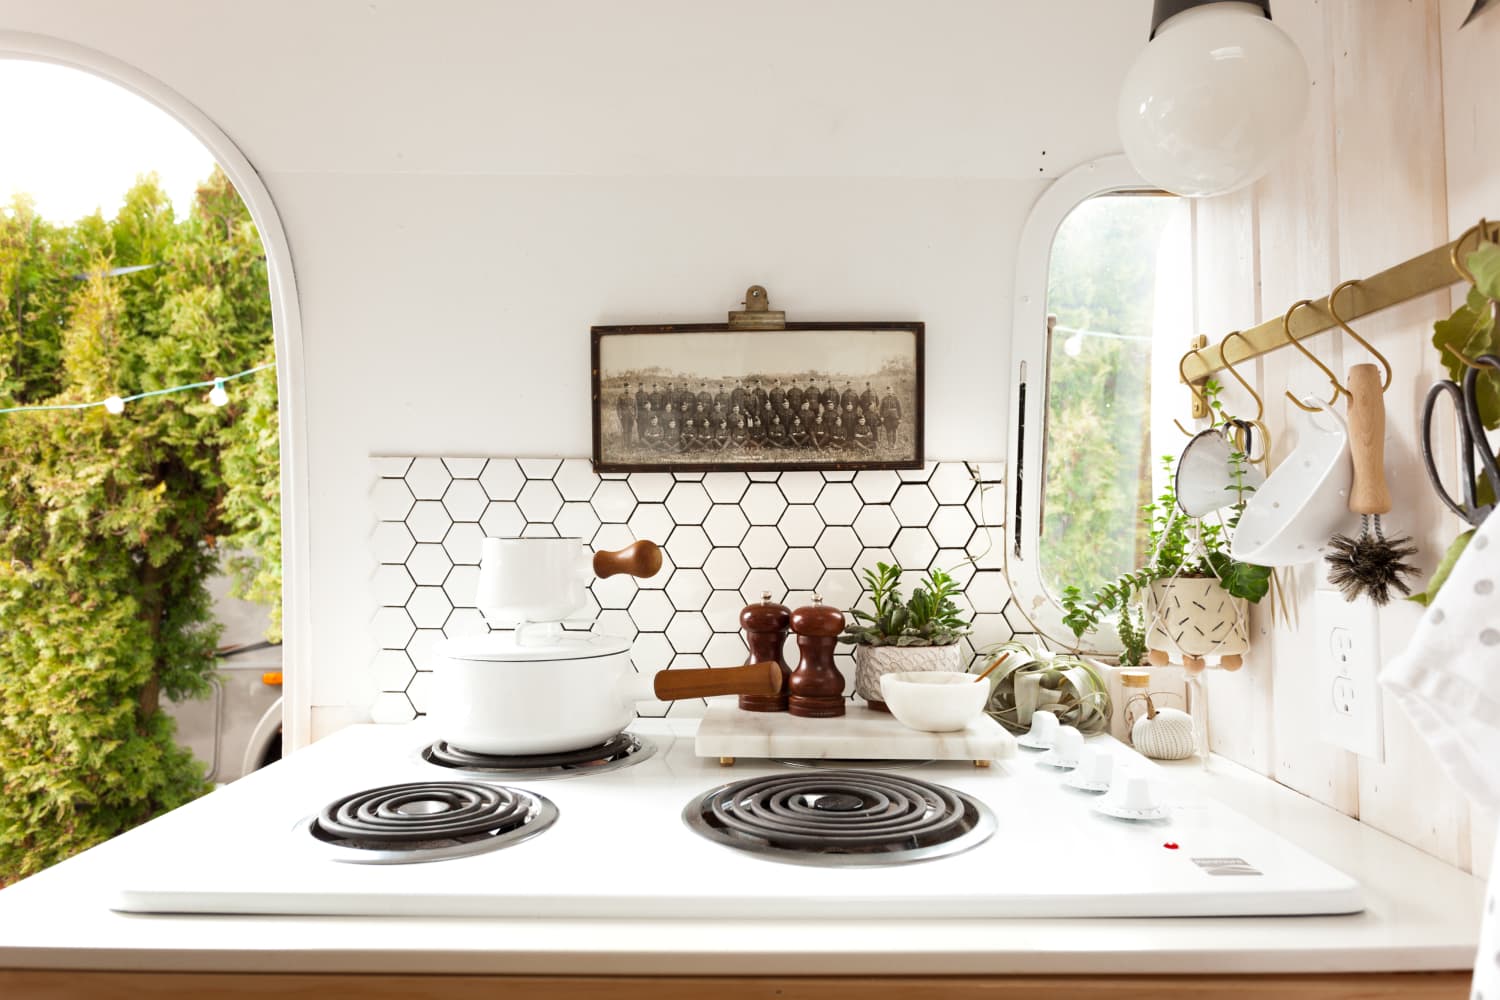 35 Best Small Kitchen Design Ideas Decorating Small Kitchen